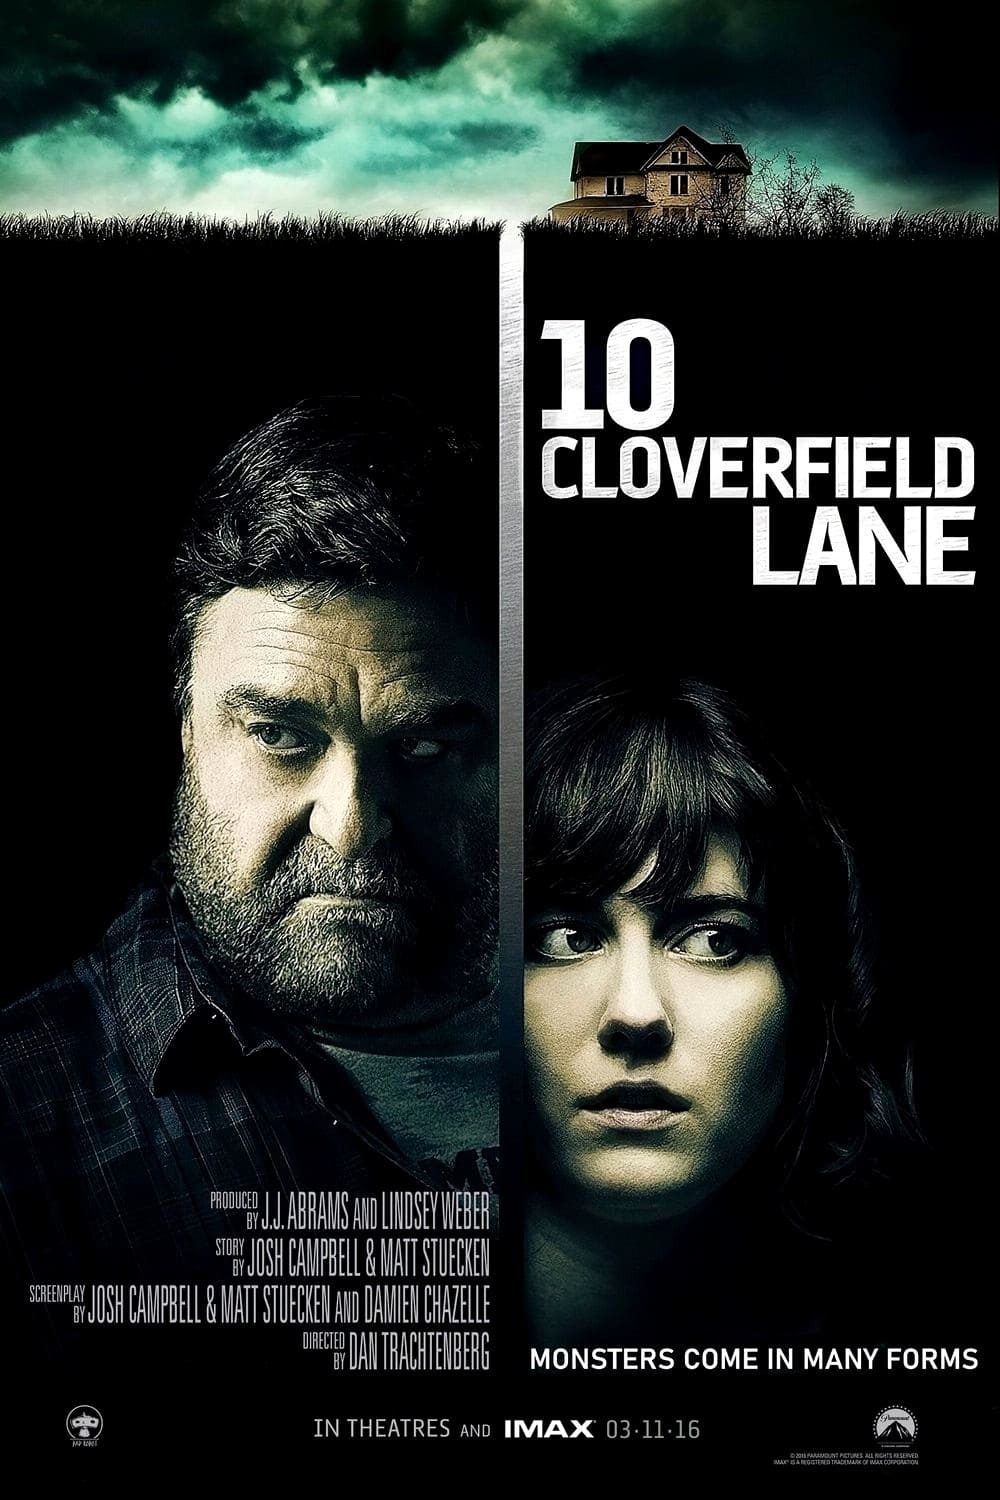 10 Cloverfield Lane Movie poster